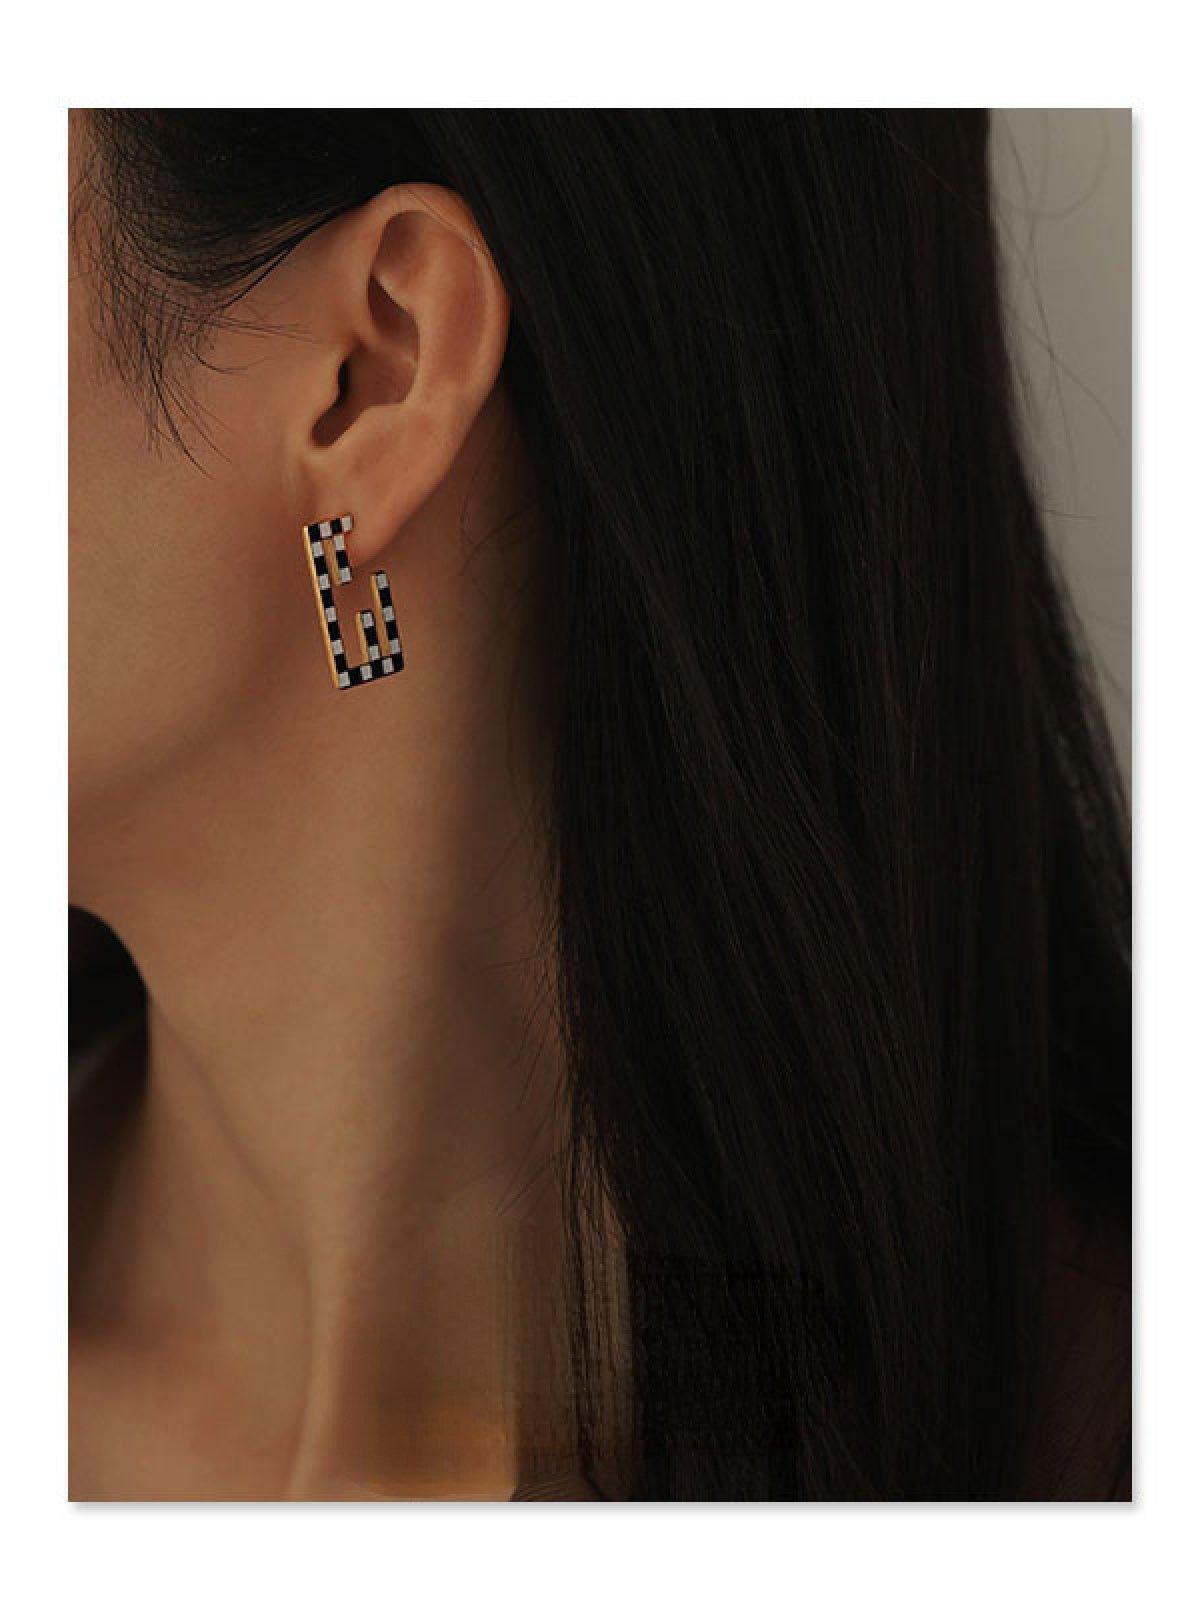 Geometric Black and White Enamel Earrings